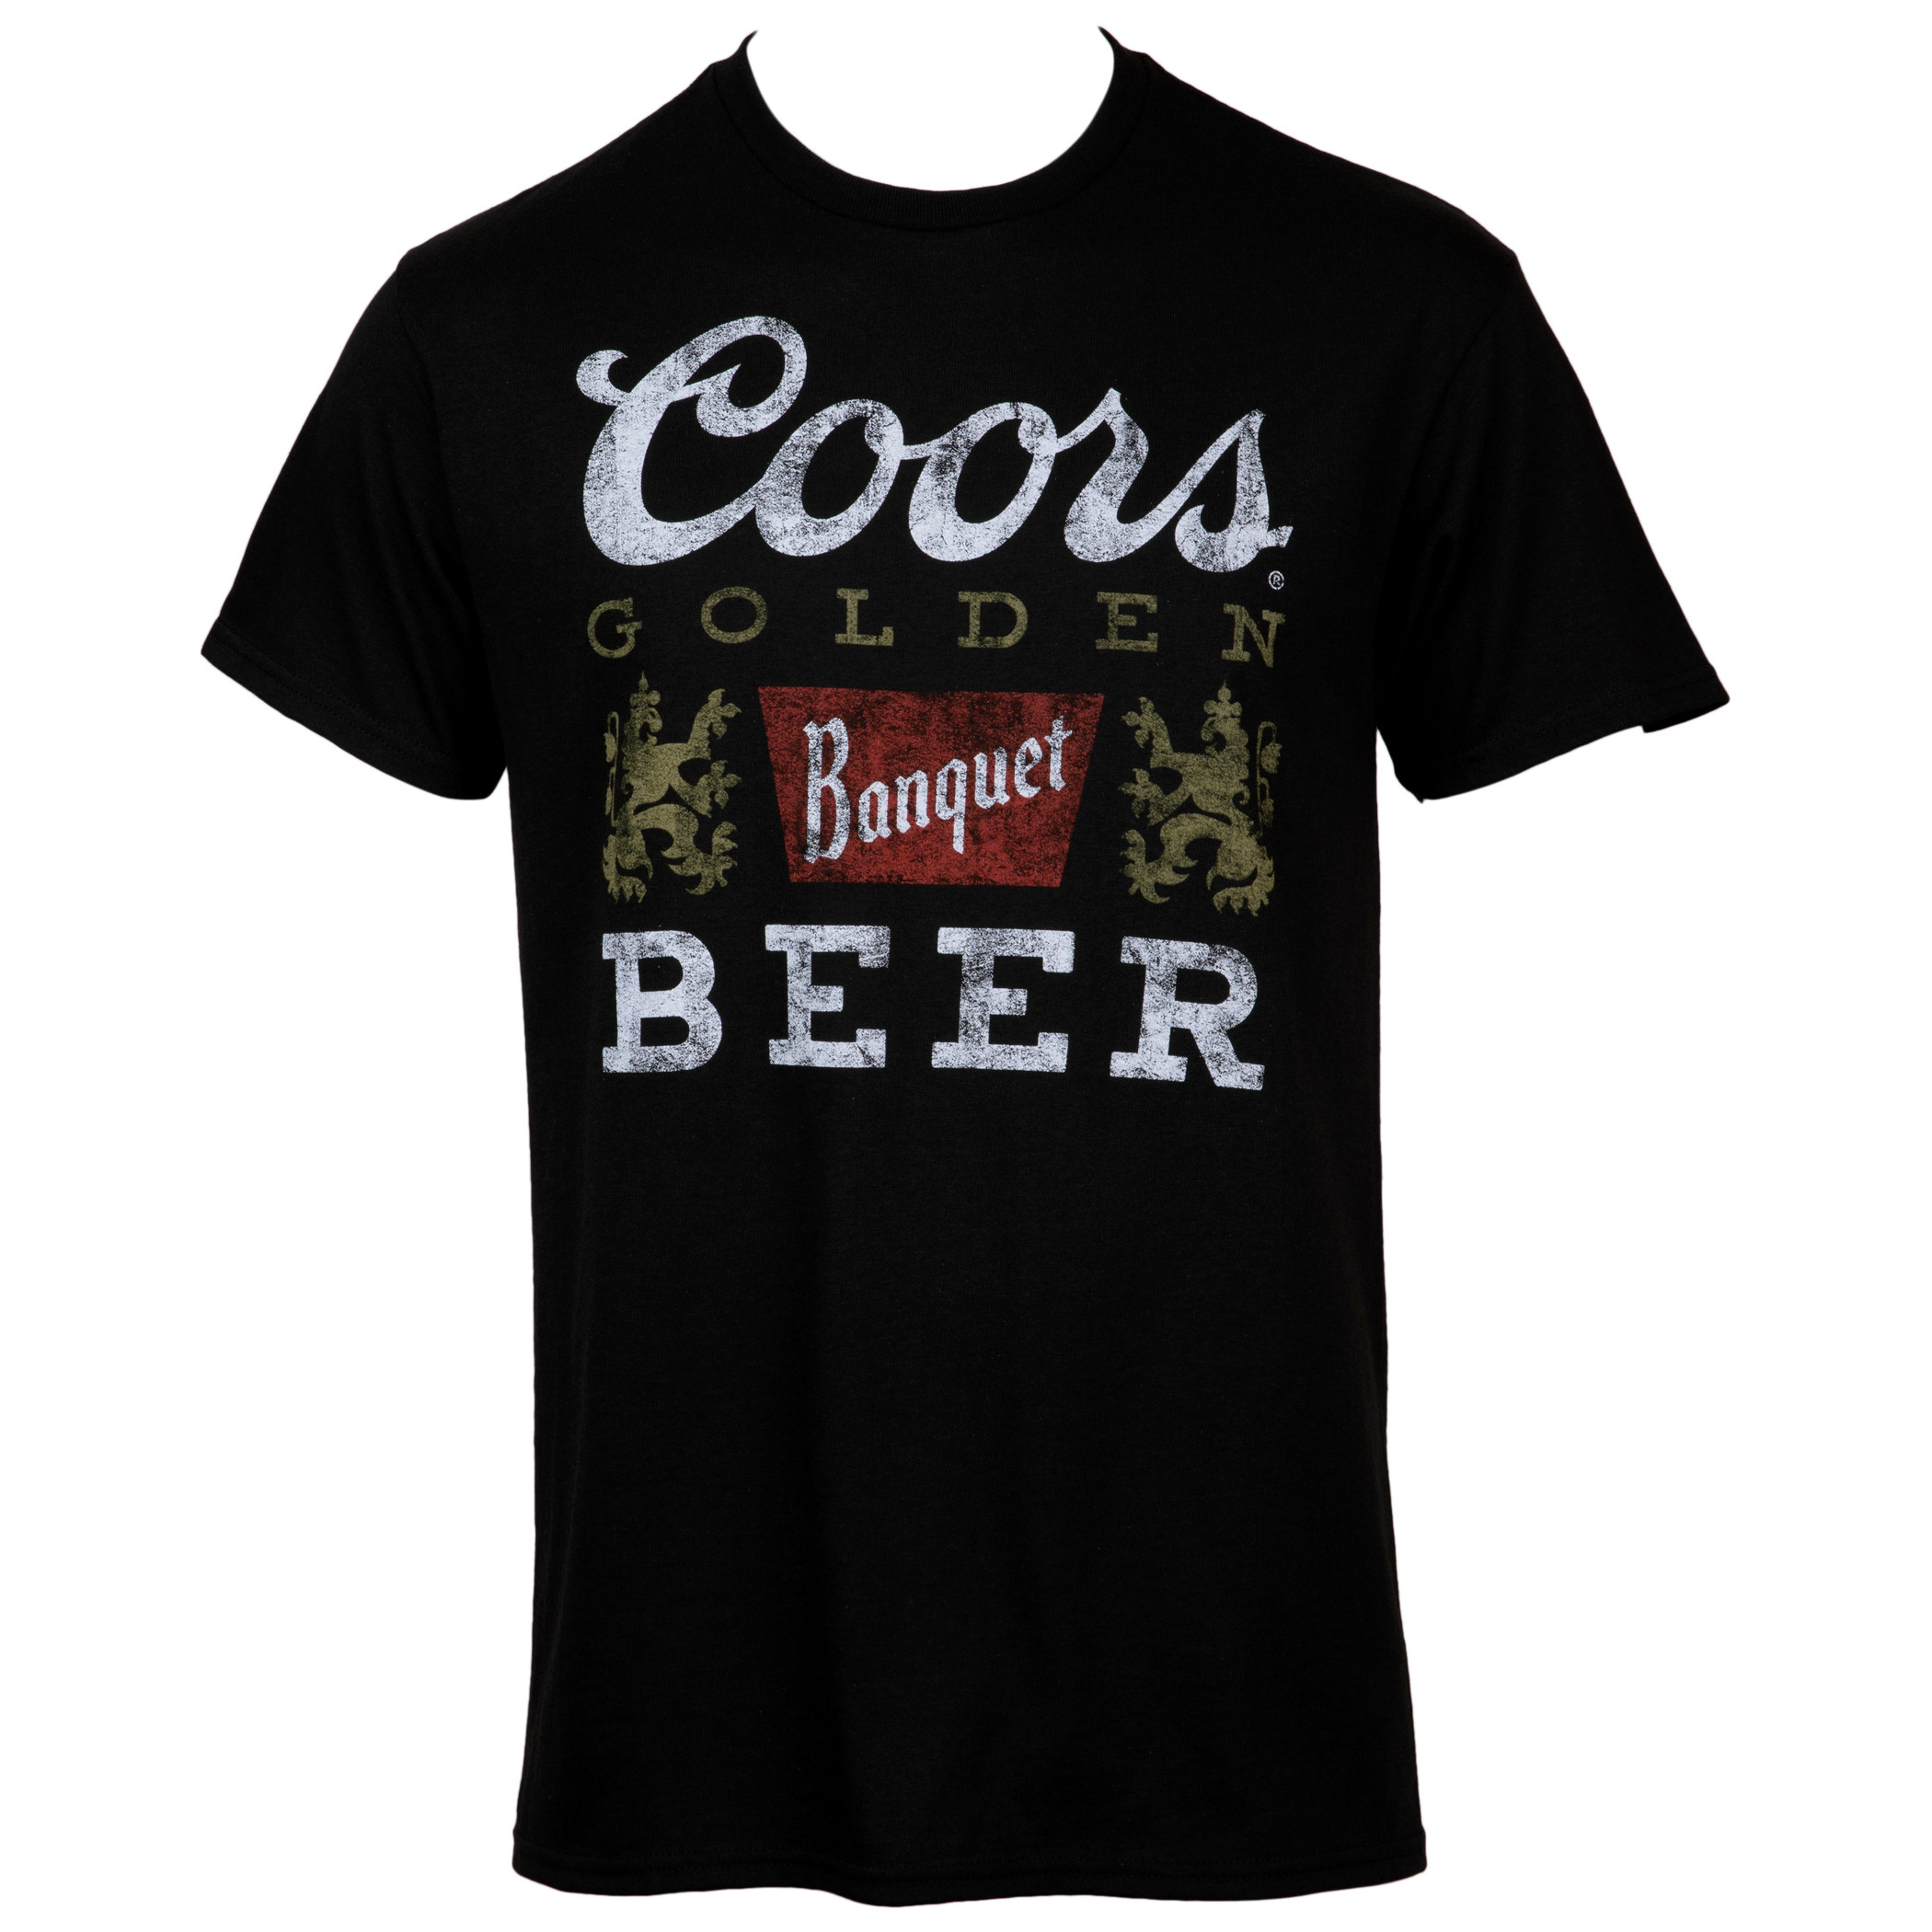 Coors Golden Banquet Beer Logo Distressed Black Colorway T-Shirt